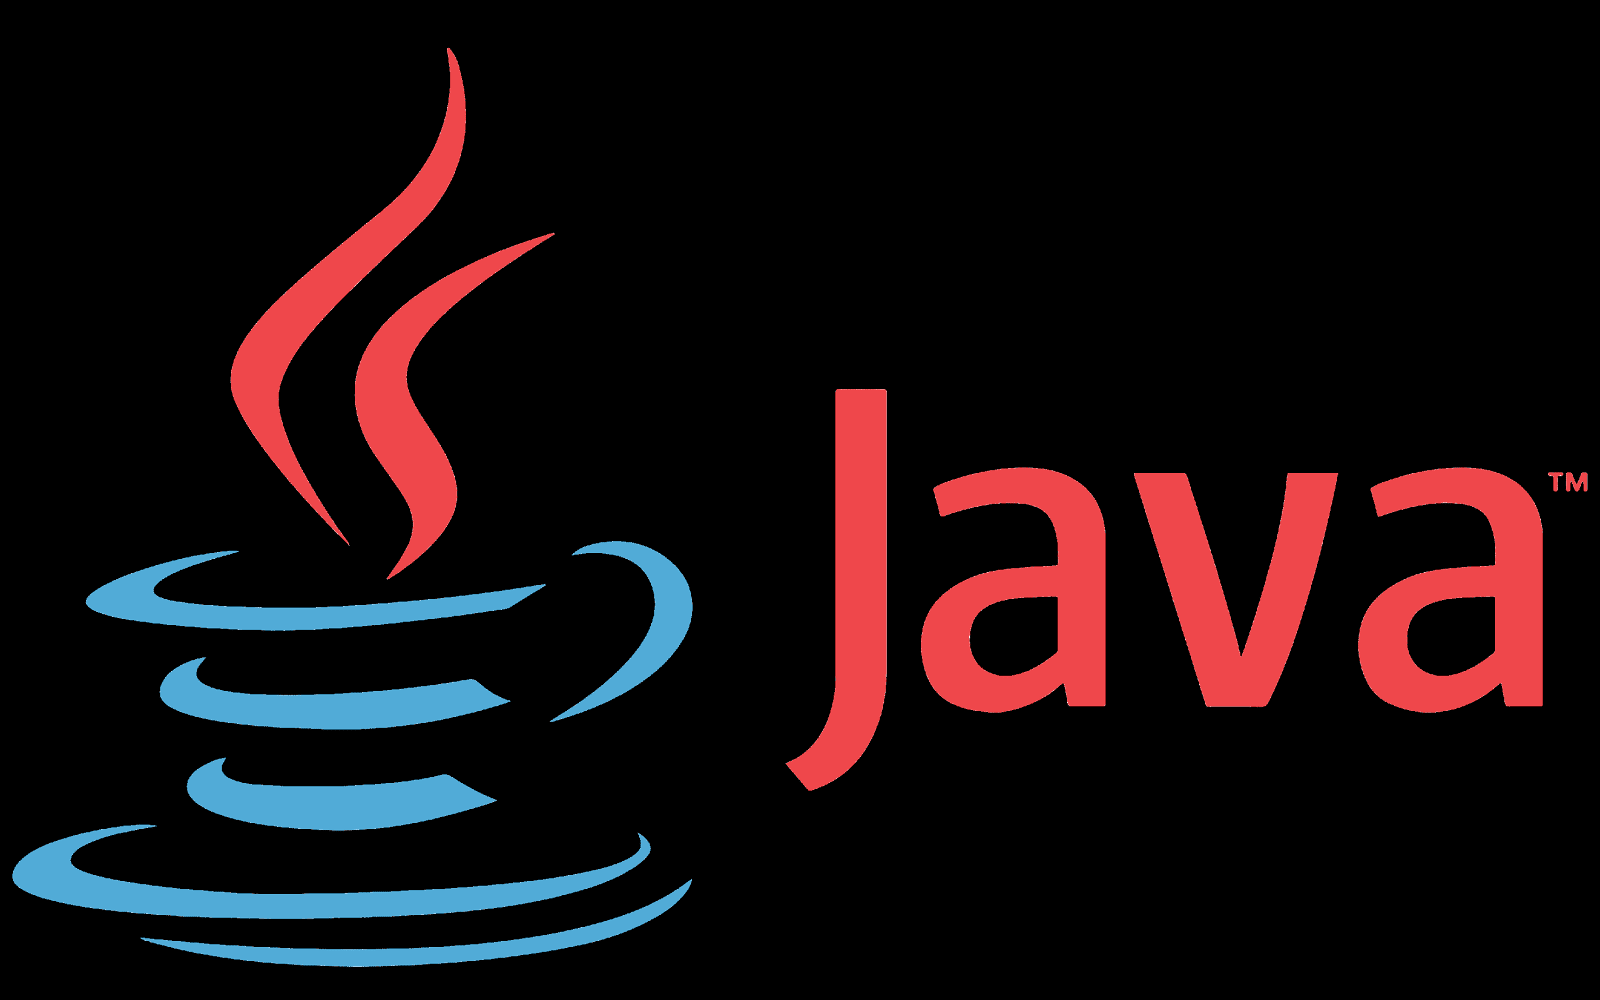 Джава учить. Язык программирования java. Язык java логотип. Java картинки. Джава язык программирования логотип.